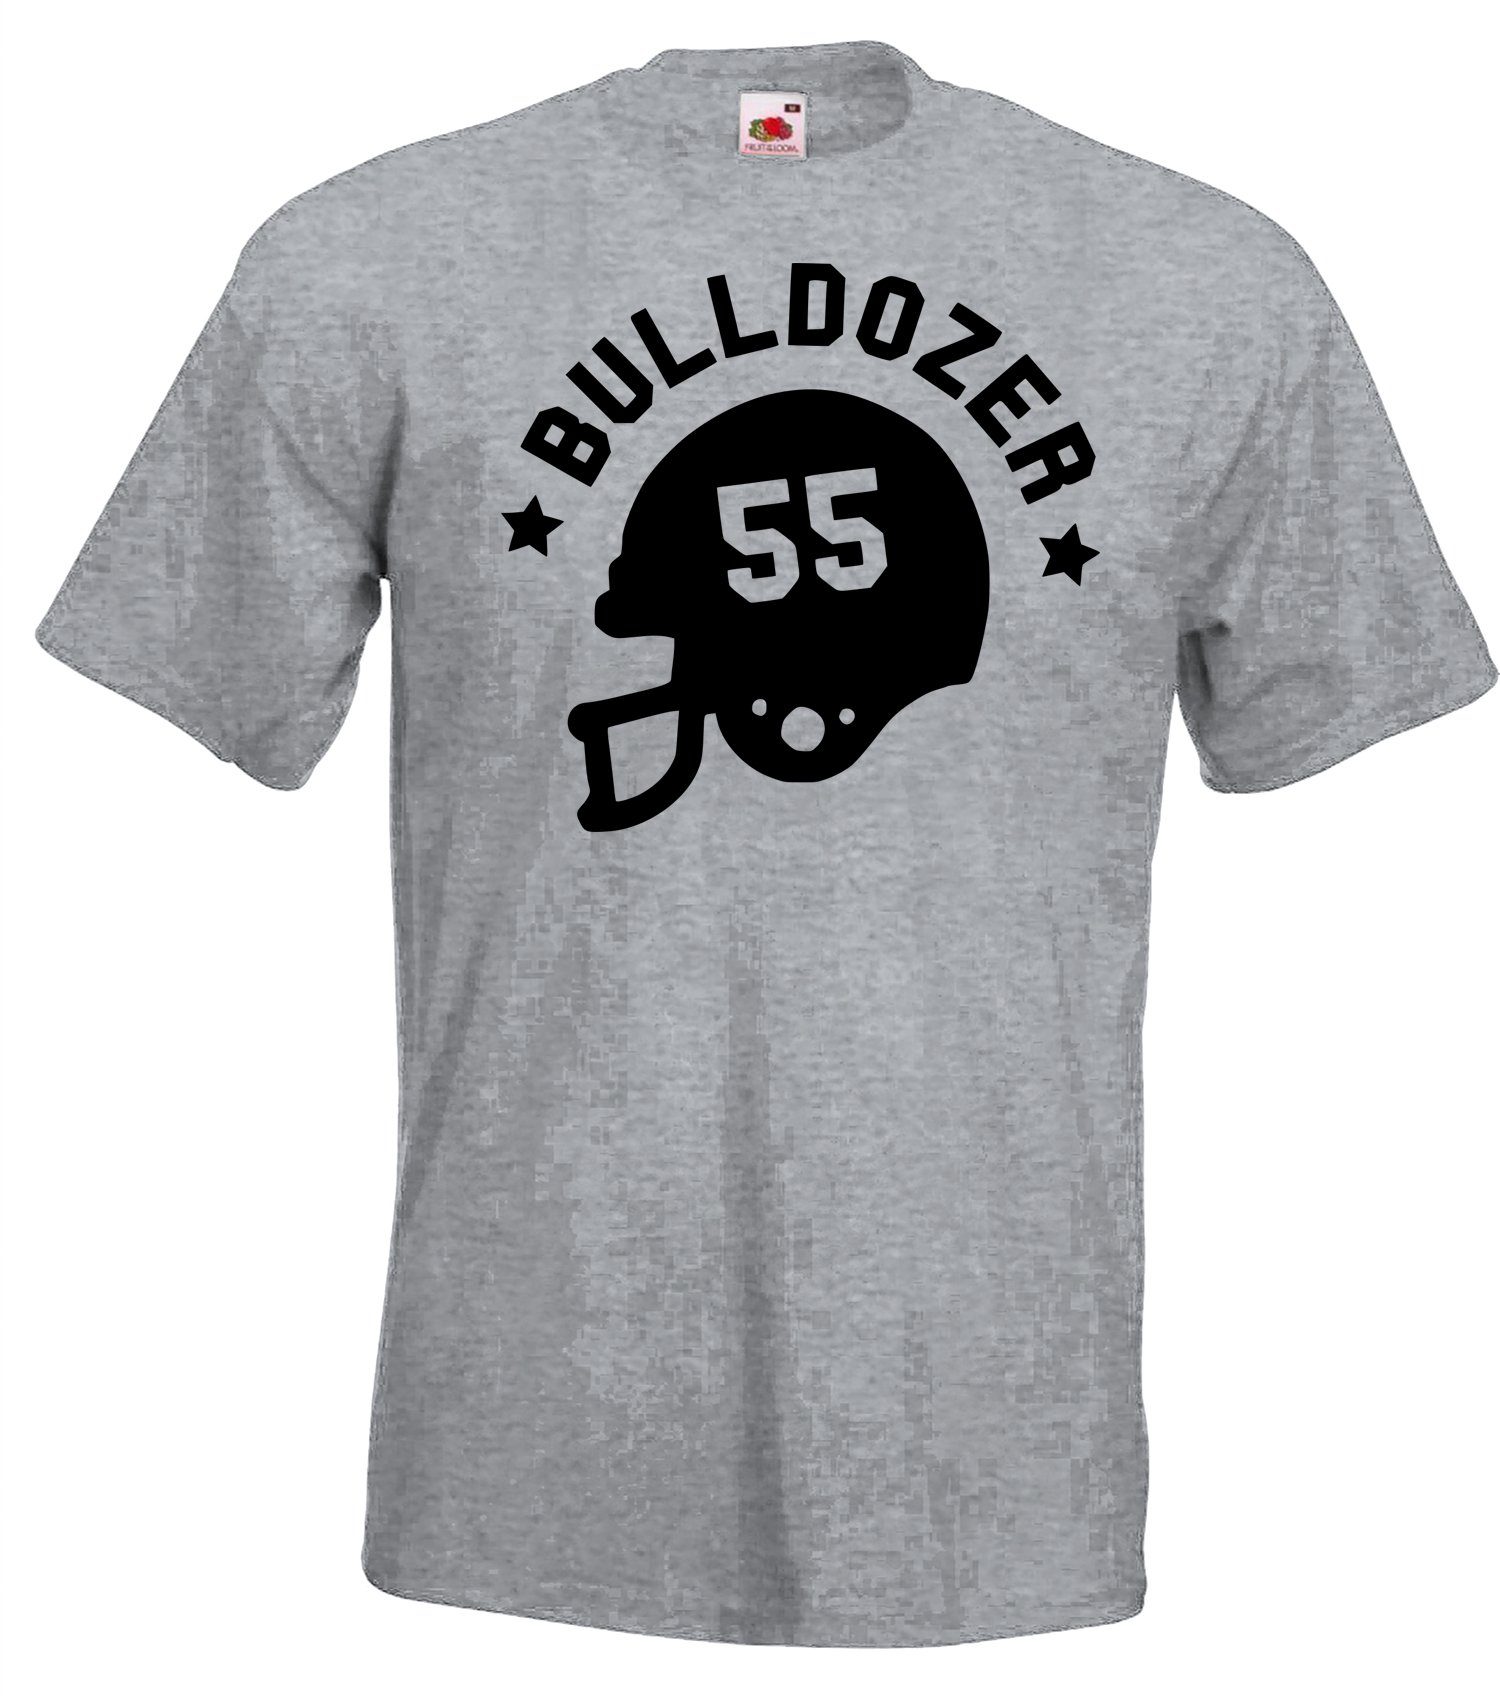 Grau Frontprint trendigem Bulldozer Shirt Designz T-Shirt mit Herren Youth